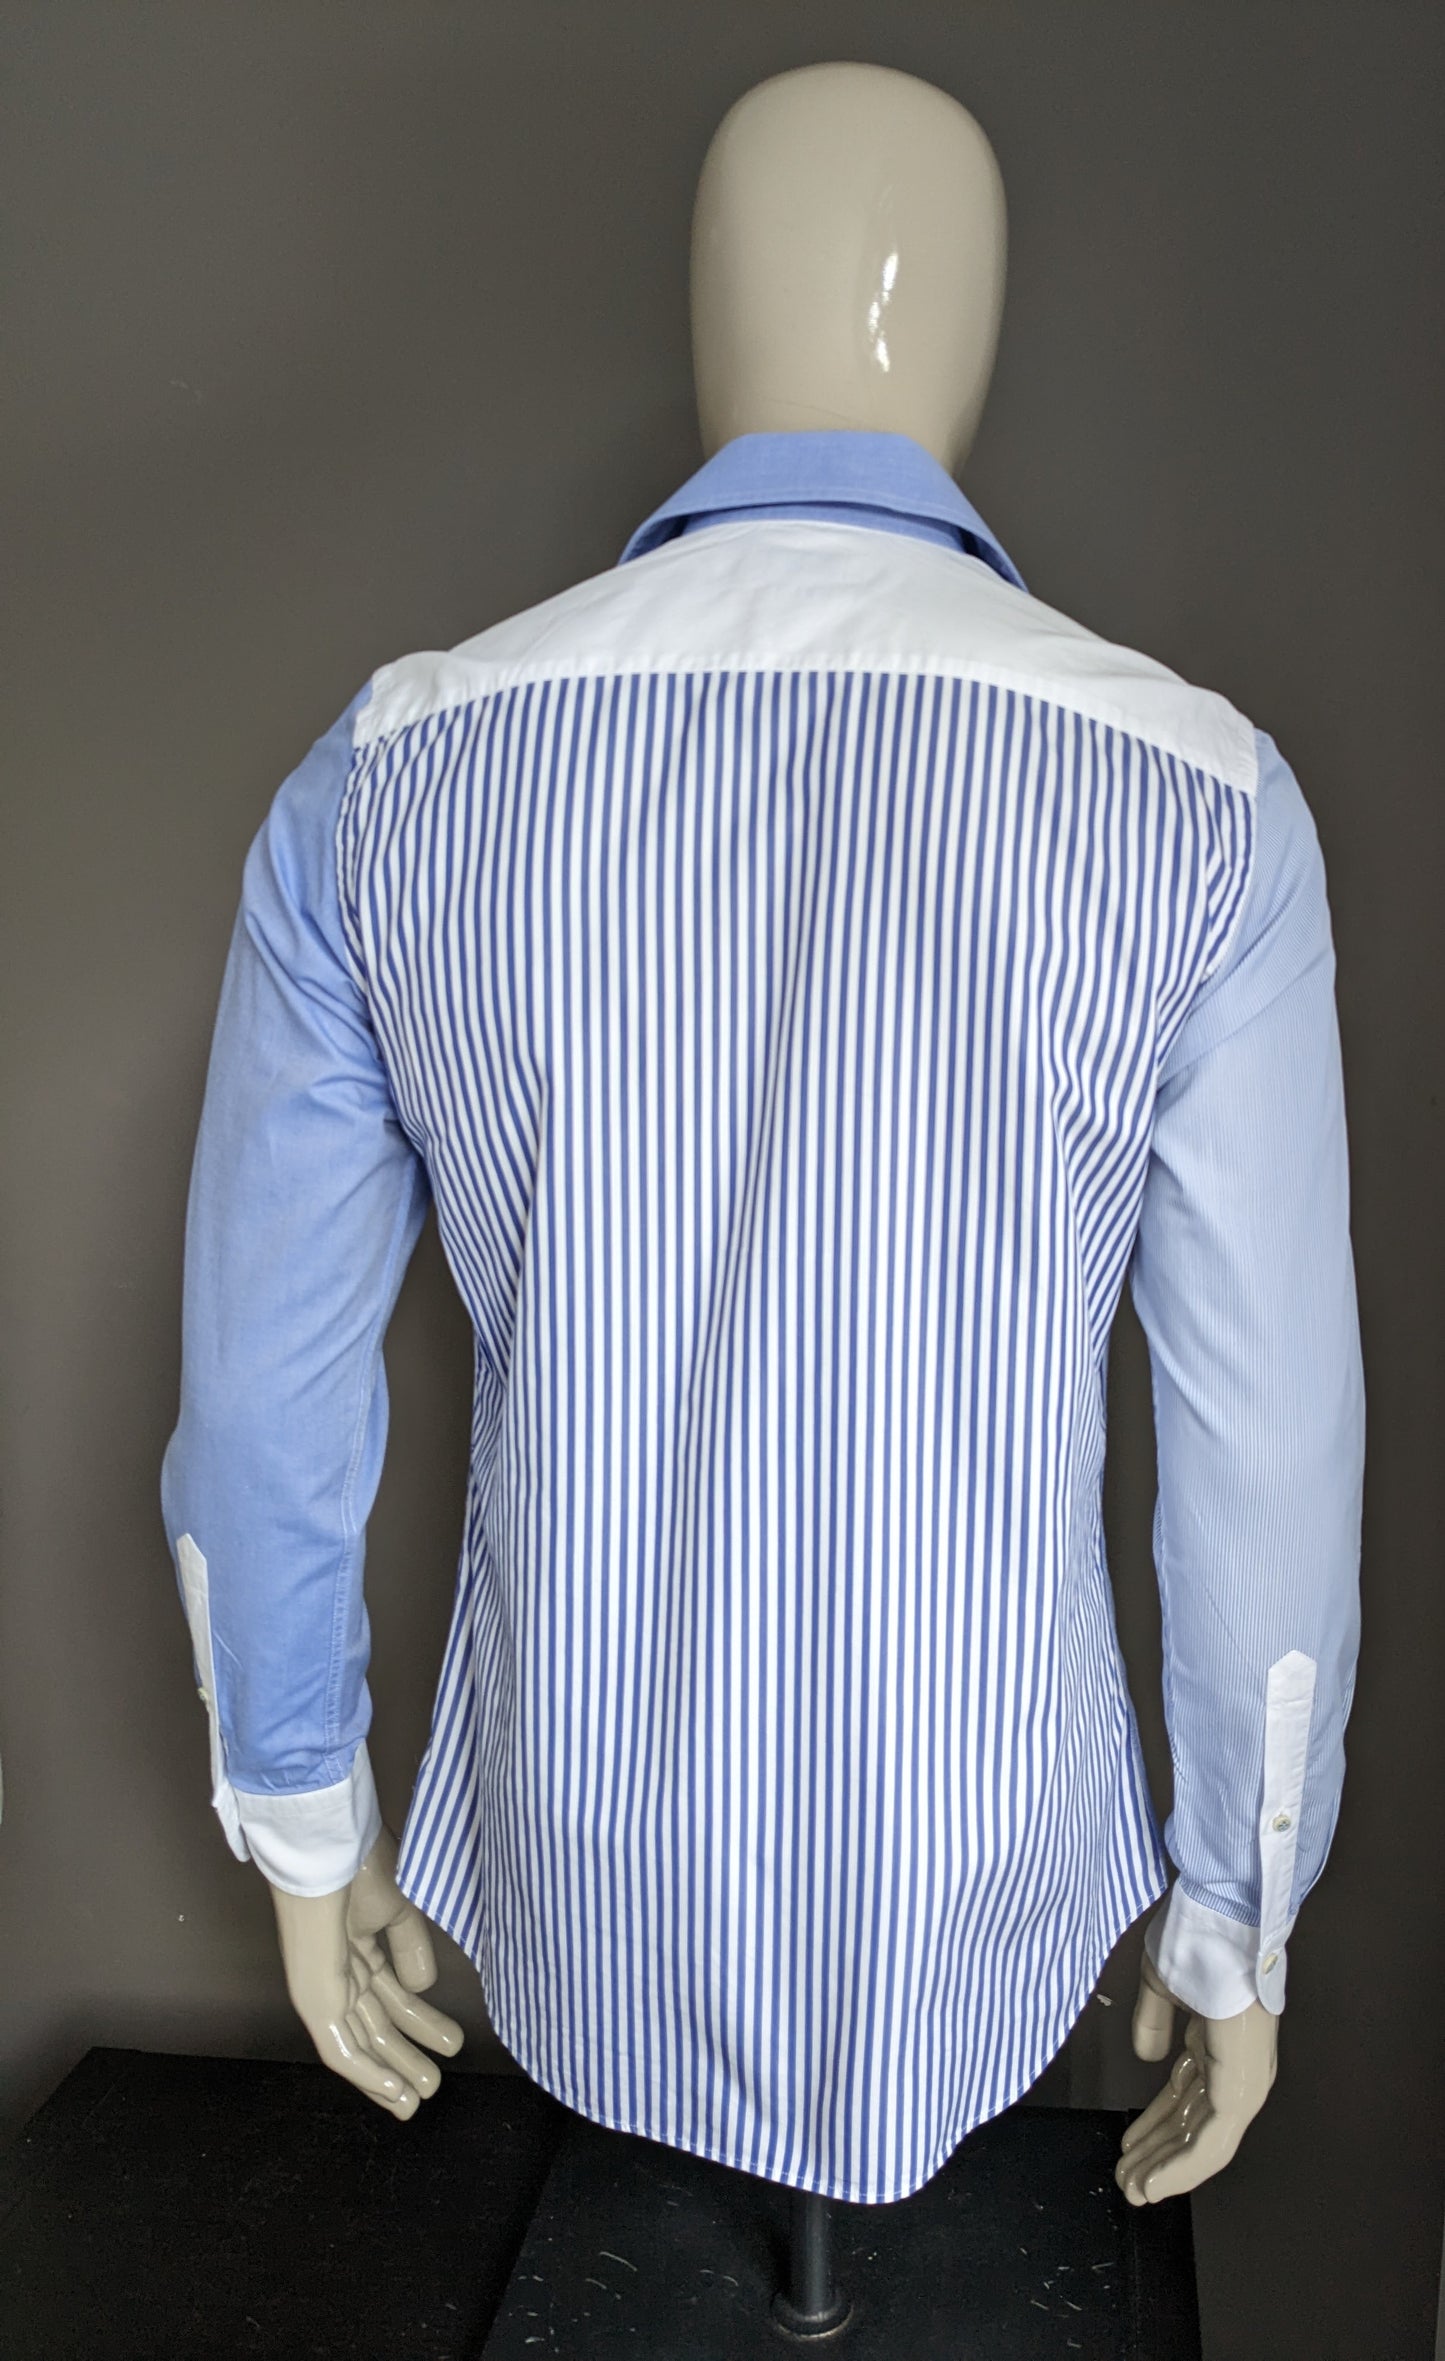 Profuomo Sky Blue overhemd. Blauw Wit gekleurd / motief. Maat 40 / M Slim Fit.